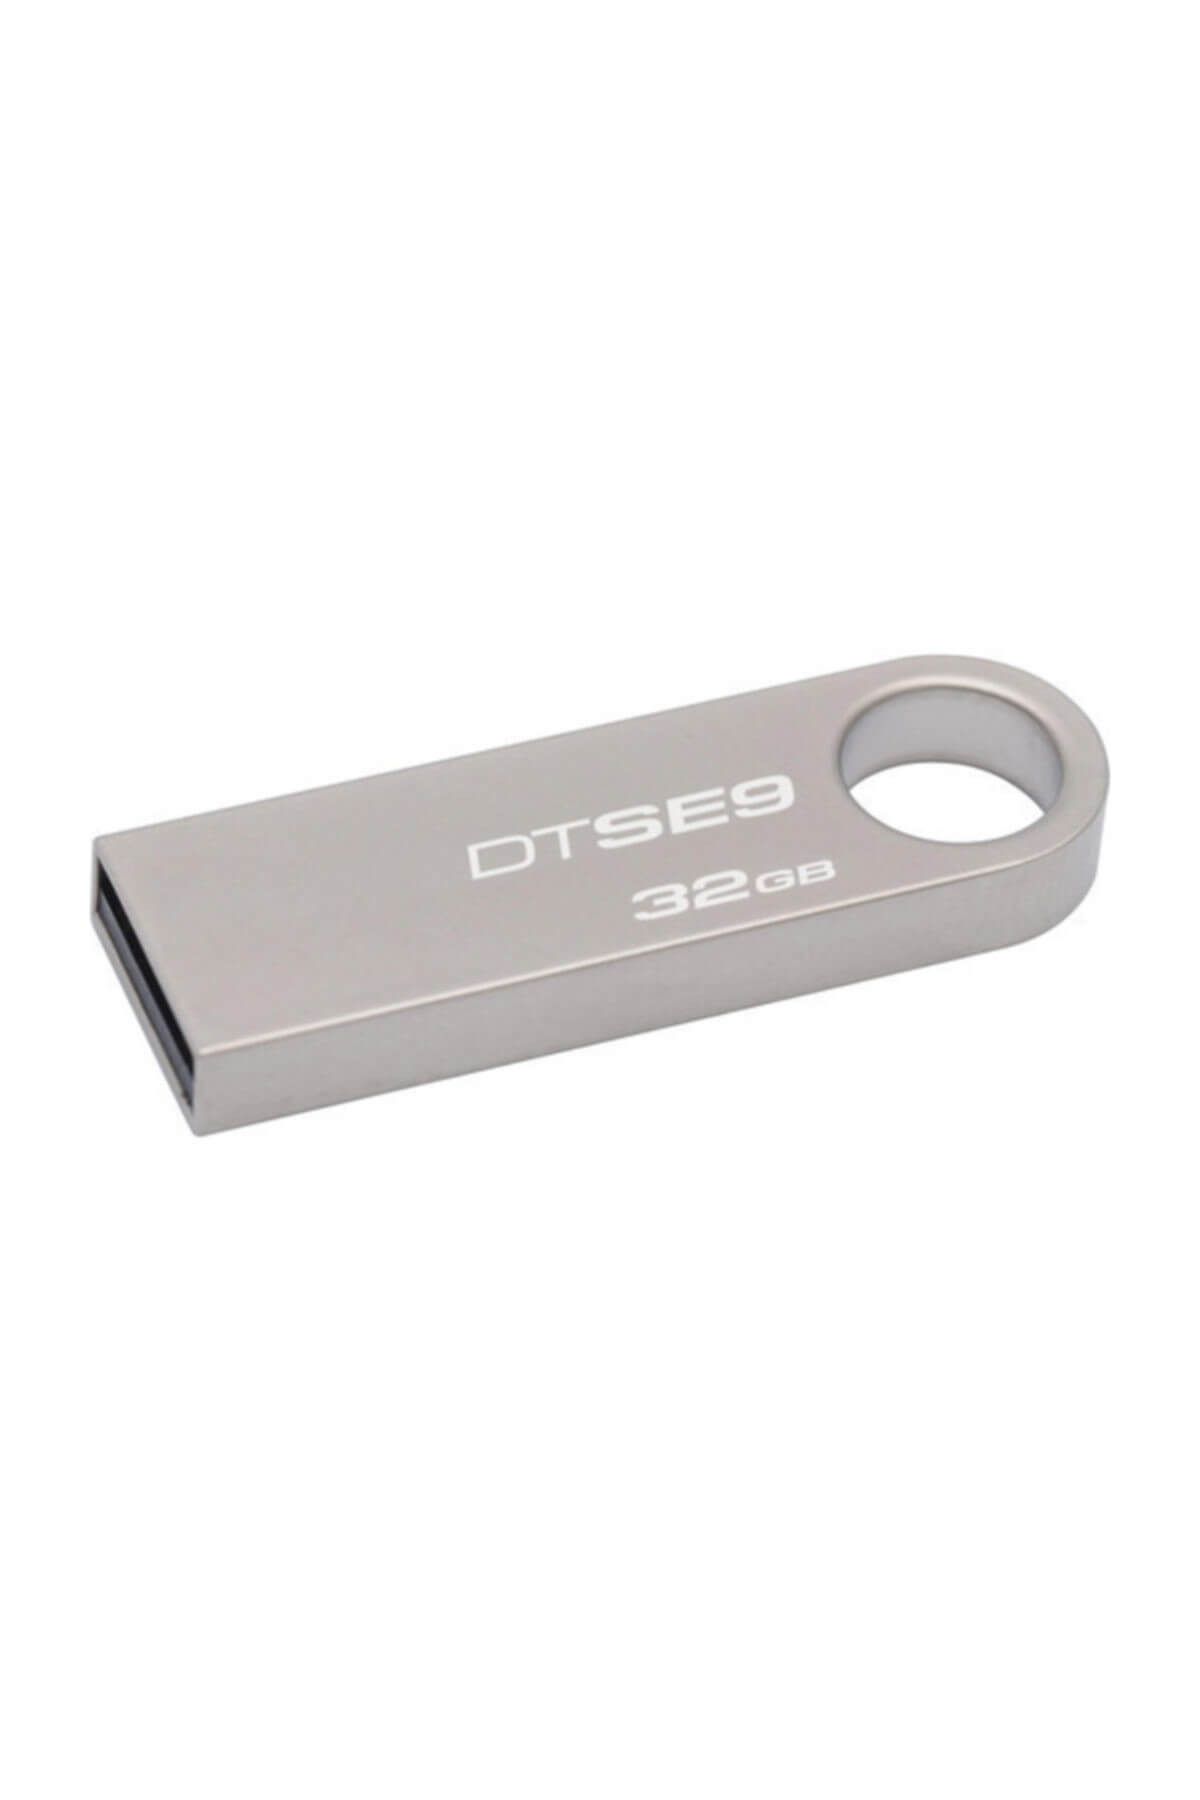 Kingston 32GB USB 2.0 DTSE9H/32GB Metal Kasa